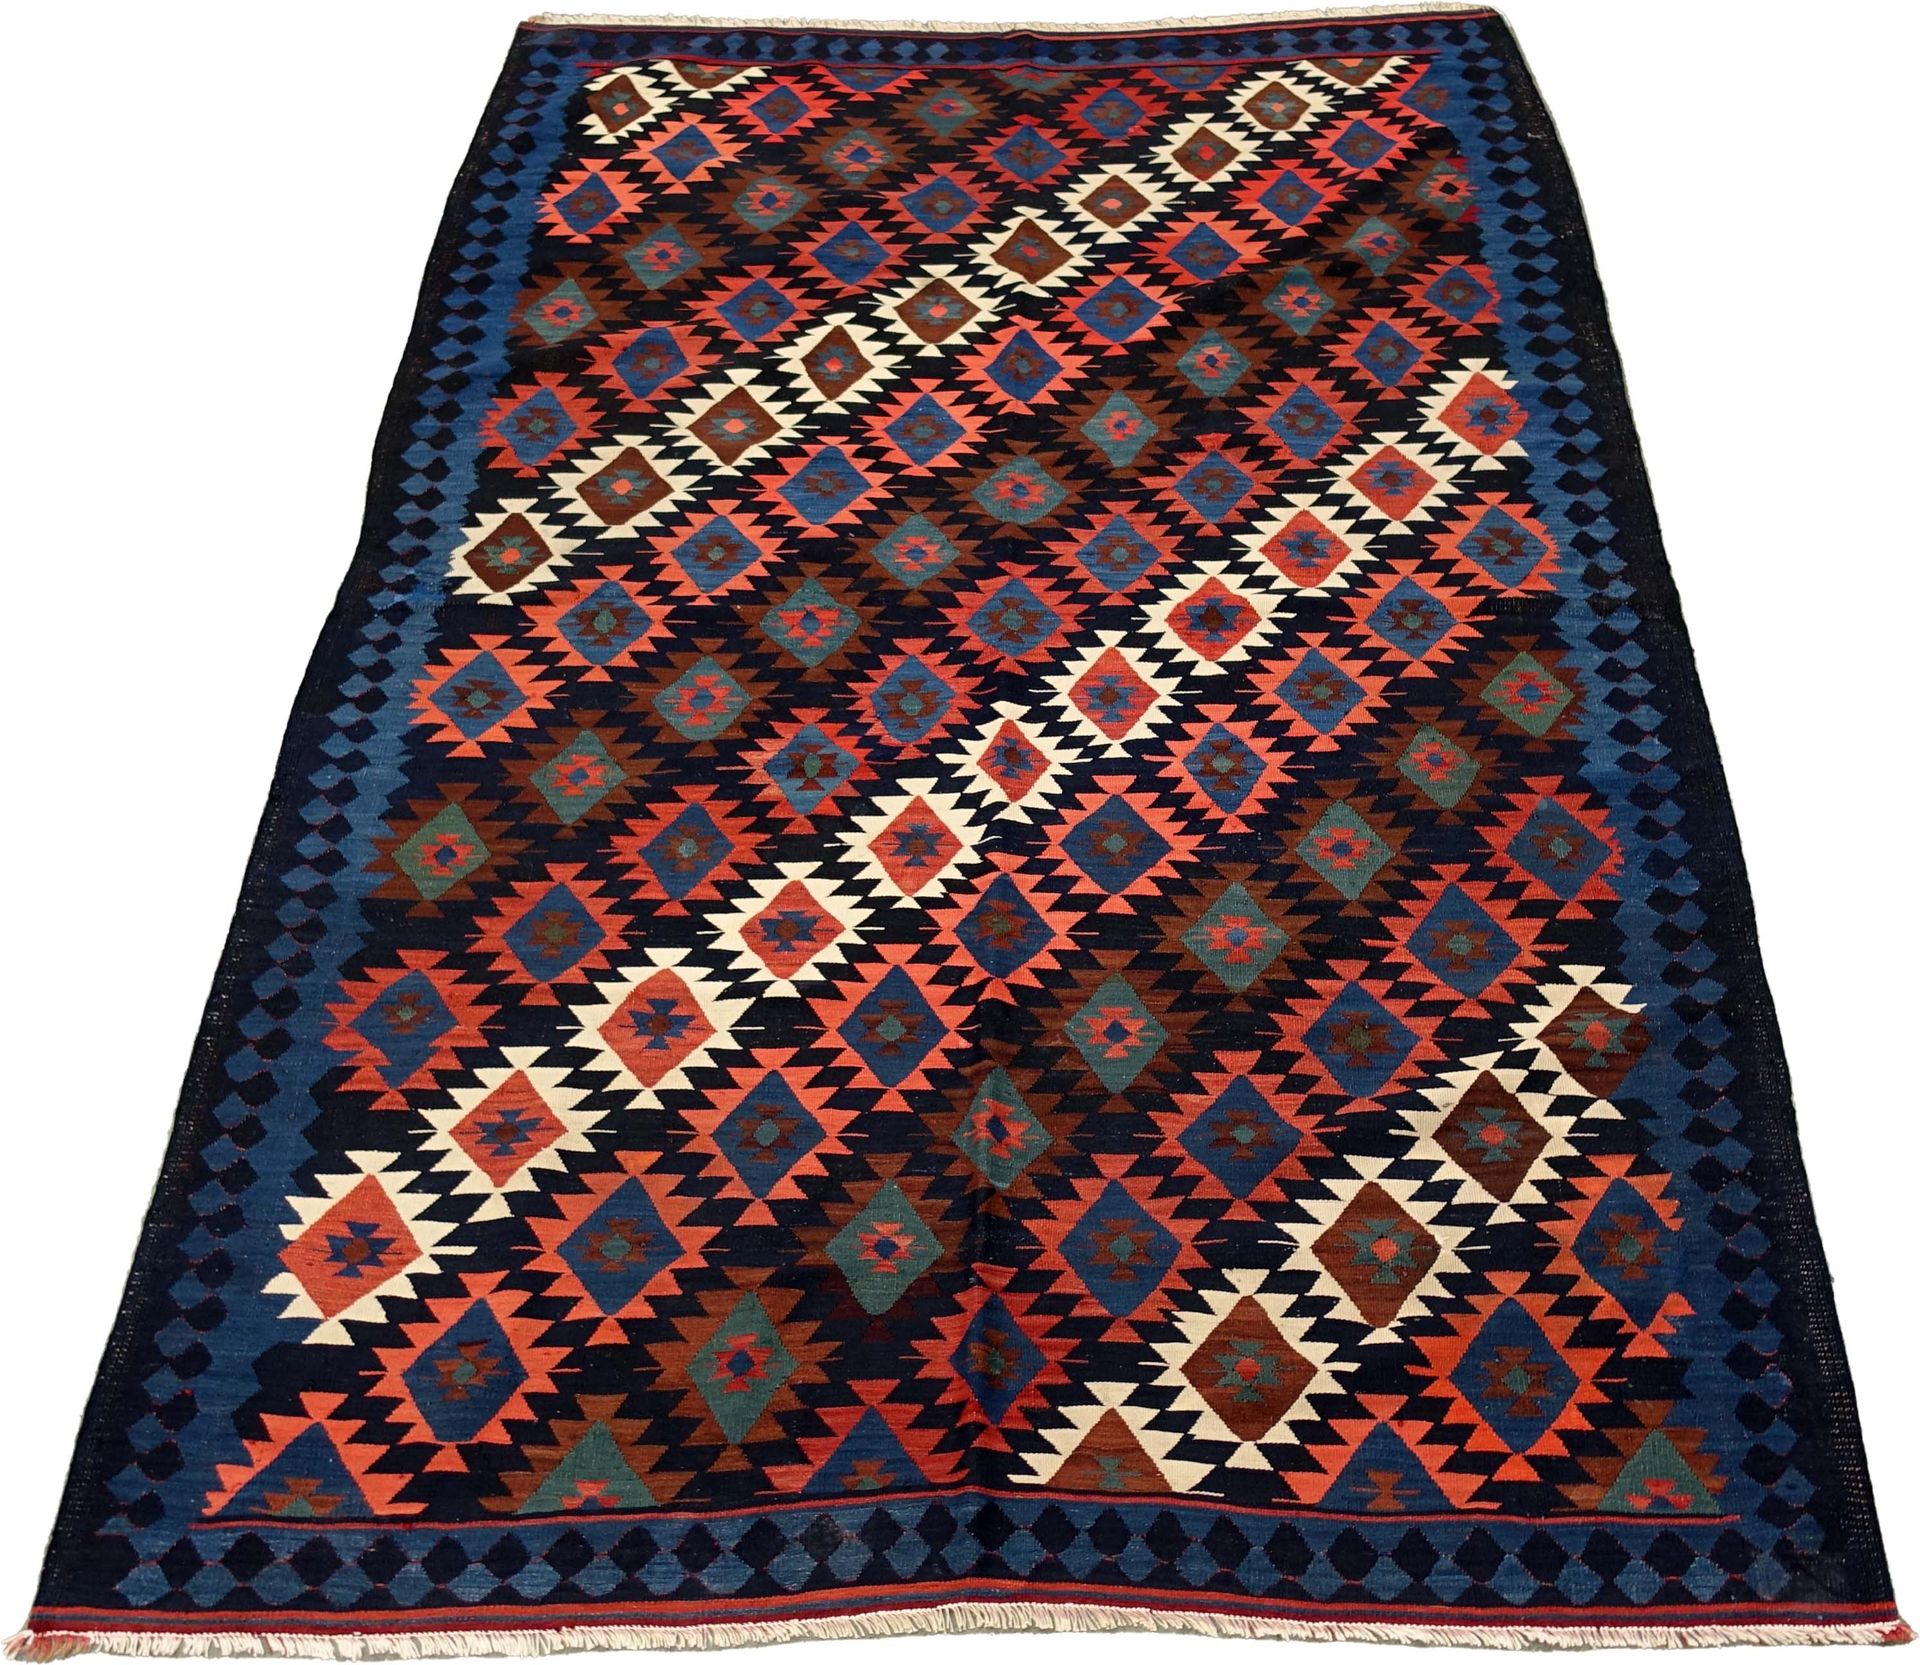 Tapis Kilim-Caucase. 黑色的背景上交叉着几何和多色的奖章带。小蓝边。尺寸：271 x 174厘米。